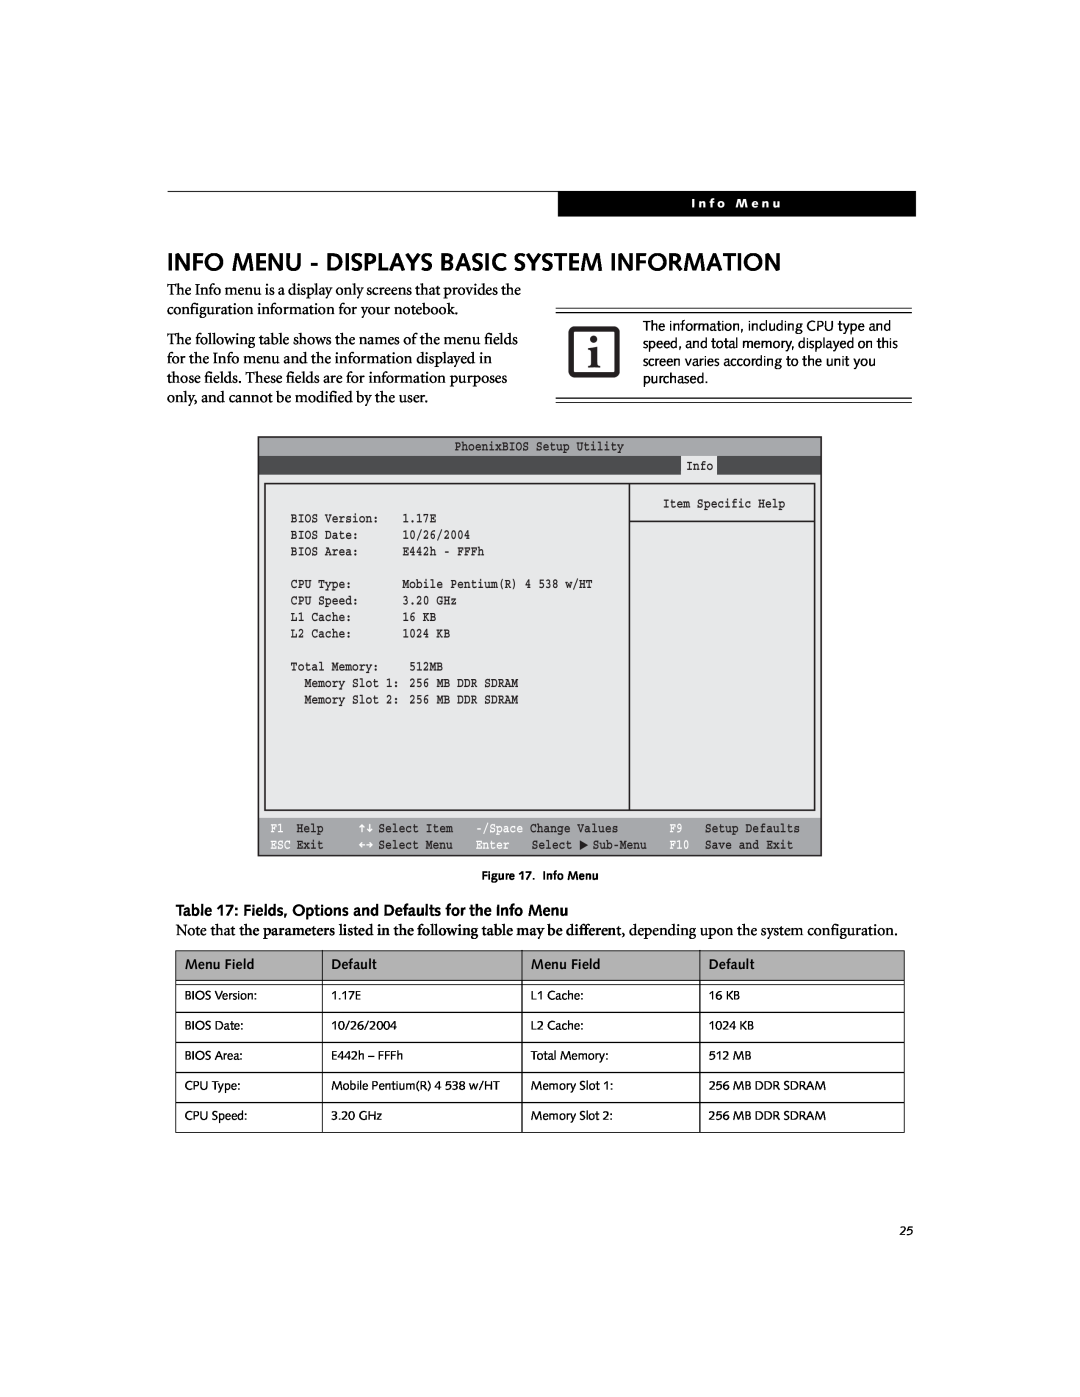 Fujitsu N6000 manual Info Menu - Displays Basic System Information, Fields, Options and Defaults for the Info Menu 